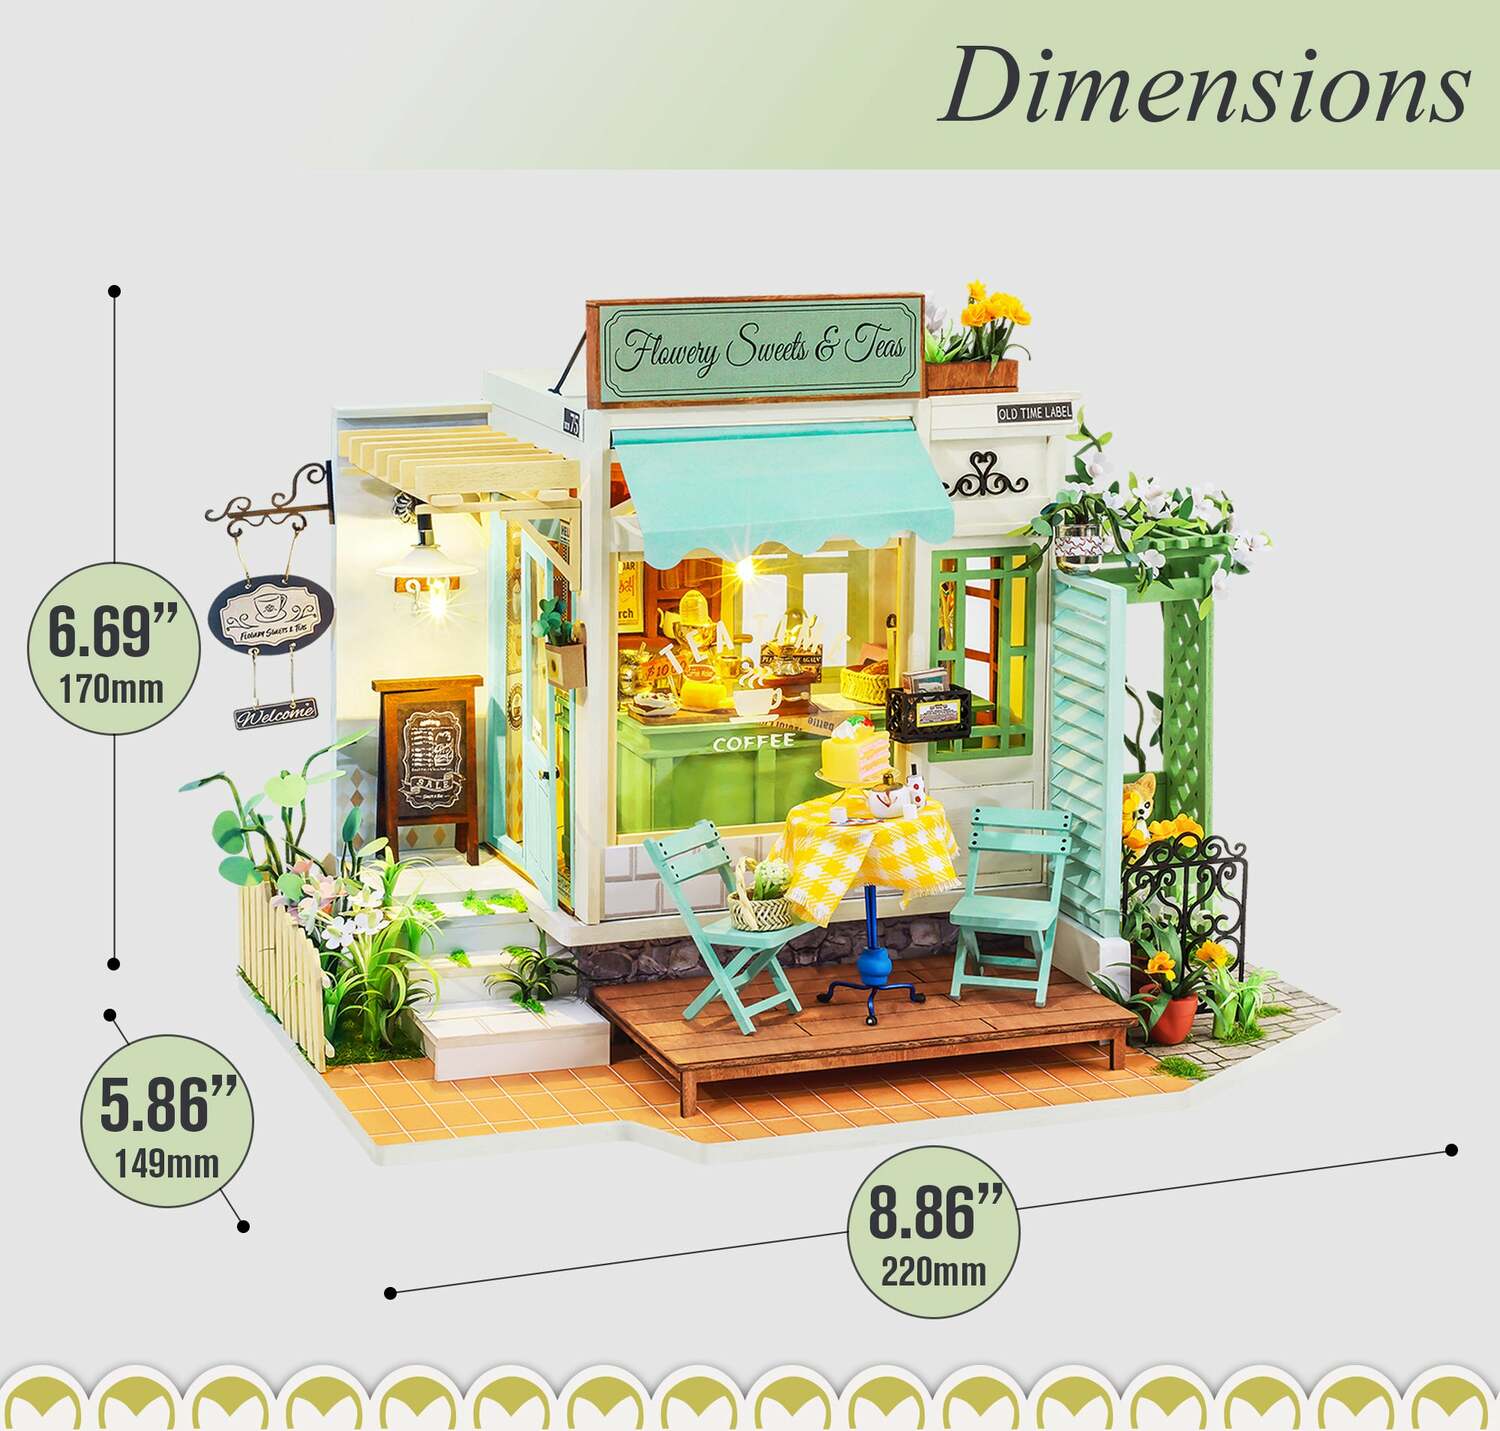 DIY Dollhouse Miniature Store Kit - Flowery Sweets & Teas